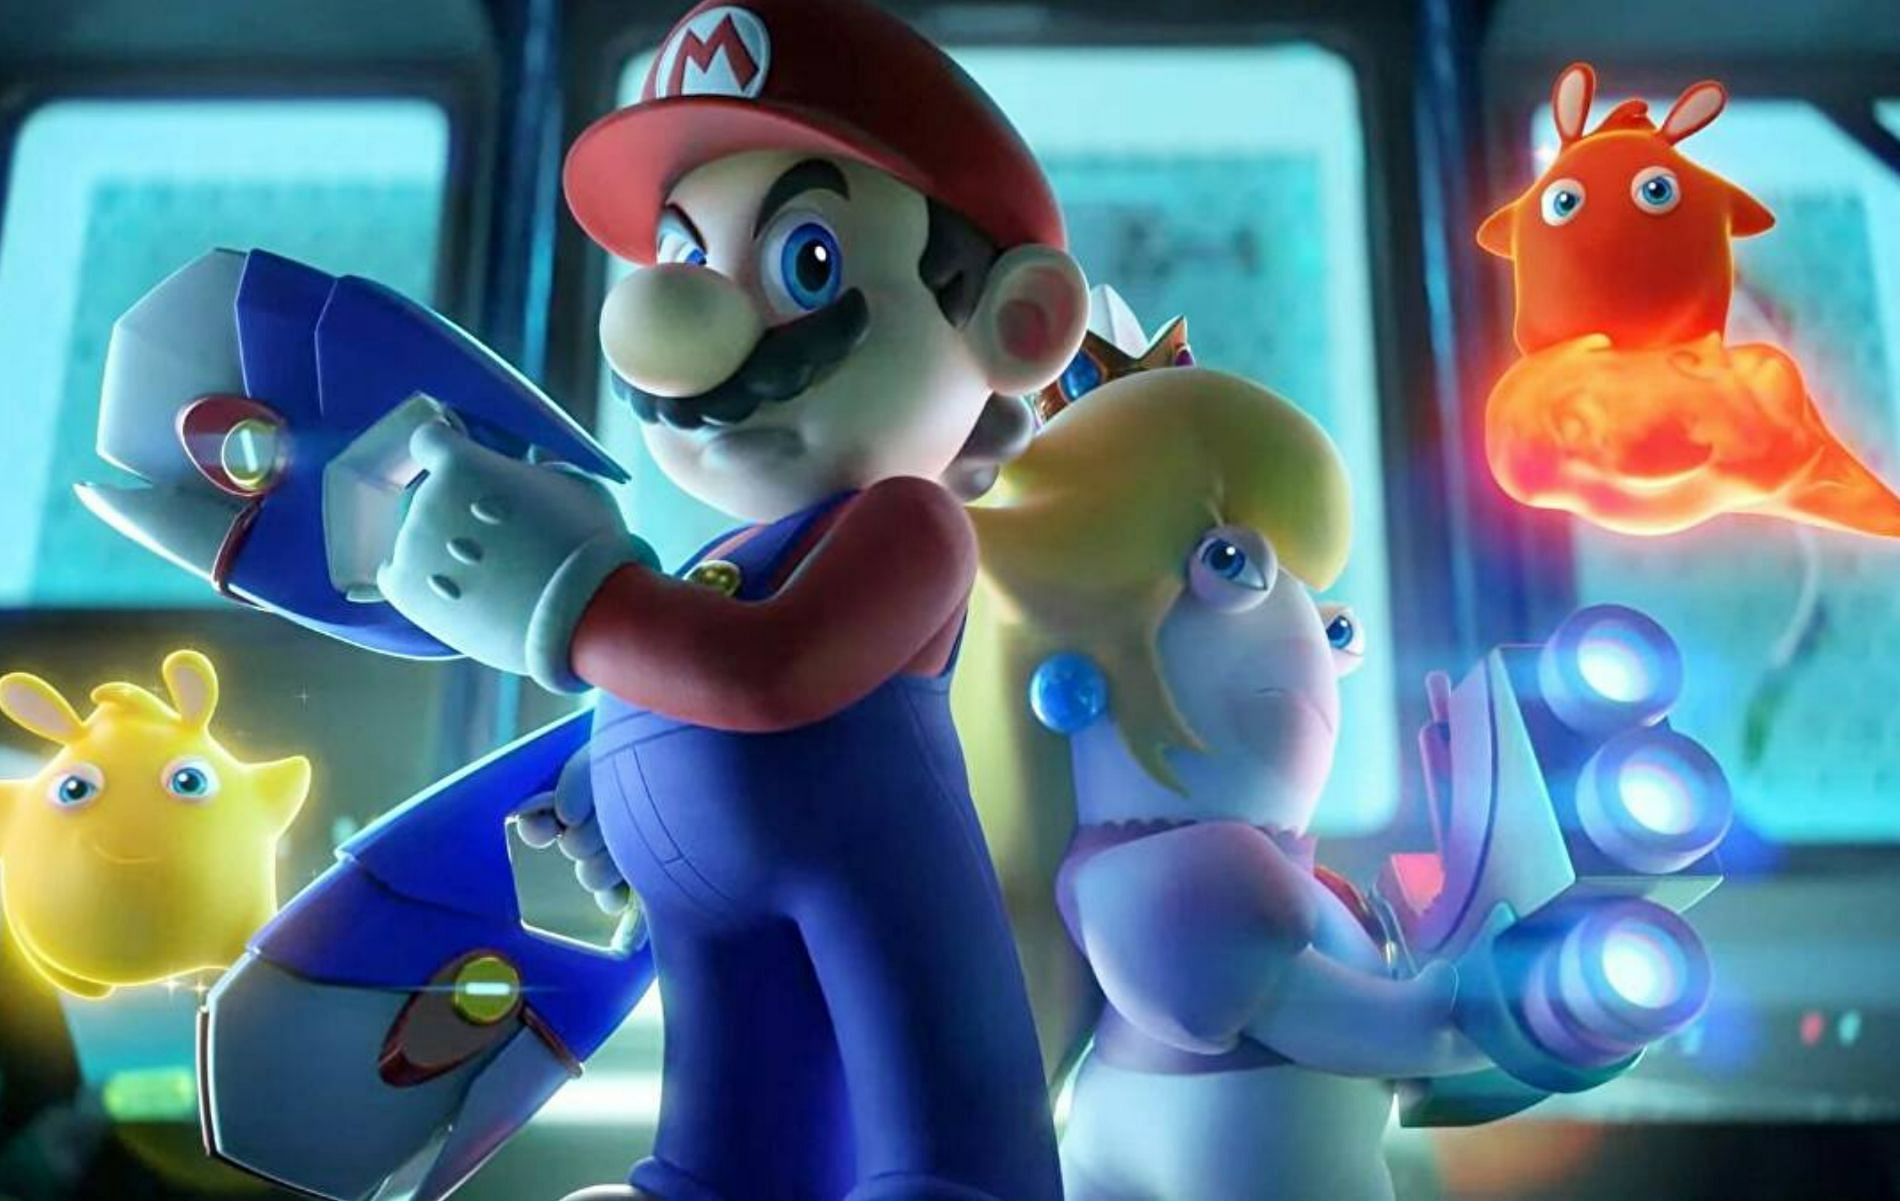 Saving your game progression in Mario + Rabbids Sparks of Hope (Image via Nintendo)